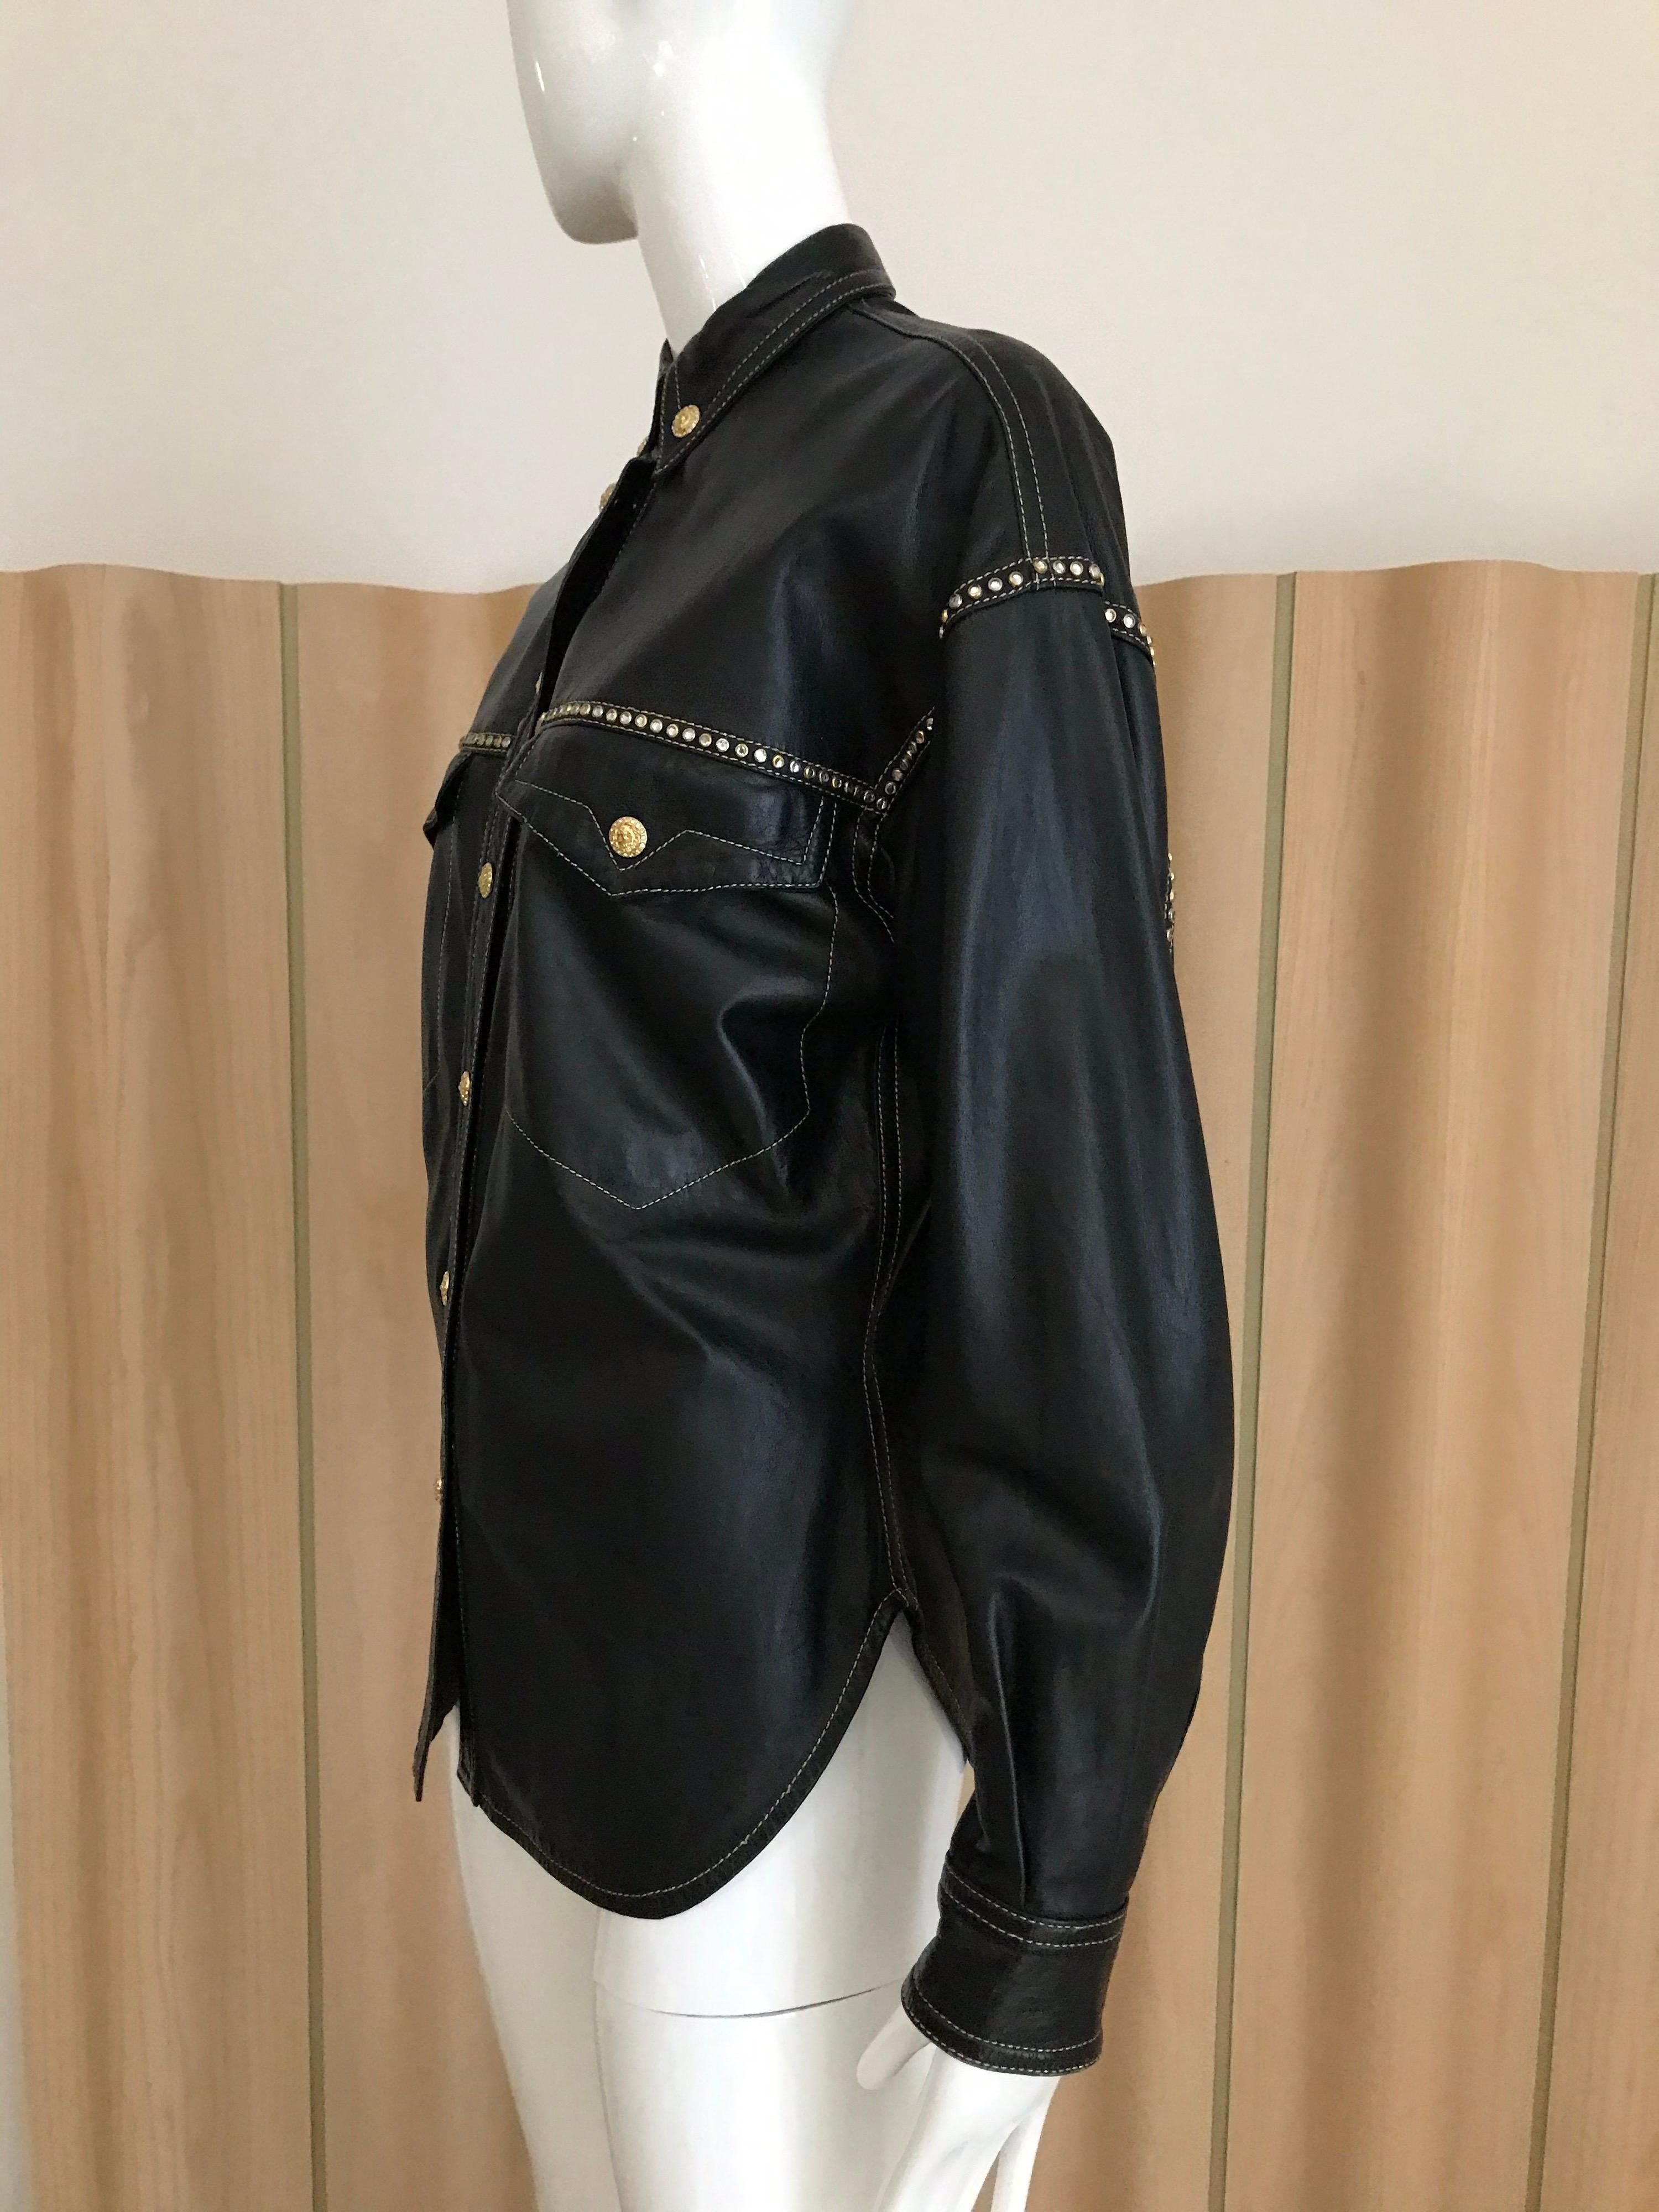 Women's 90s Gianni Versace black leather western shirt